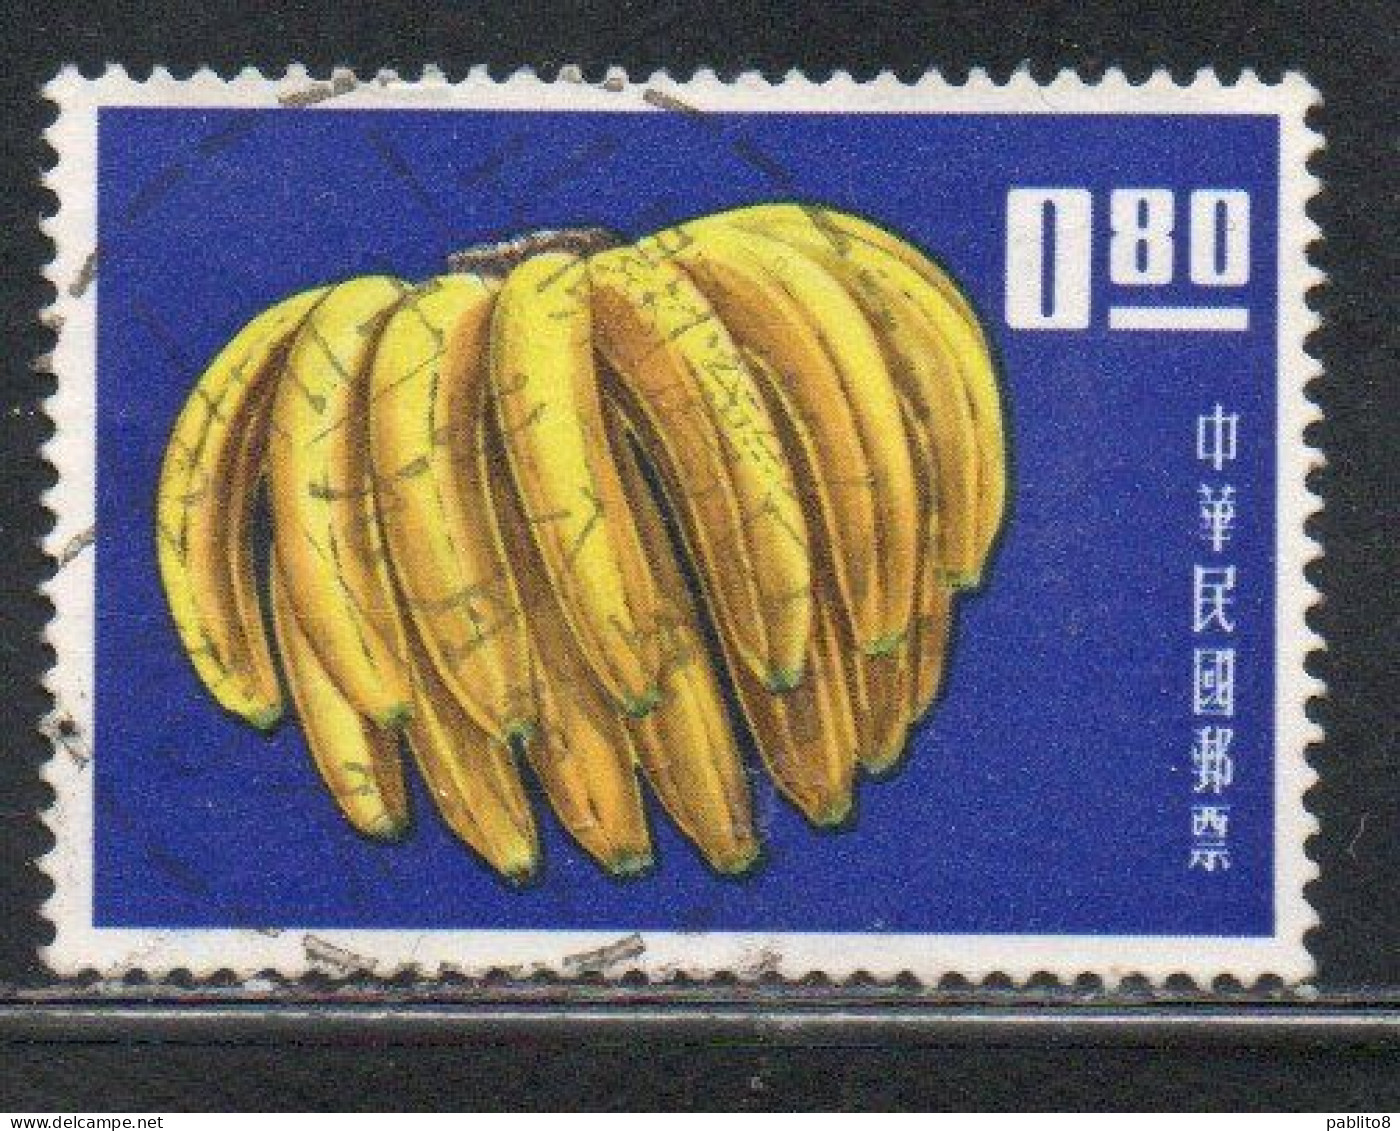 CHINA REPUBLIC CINA TAIWAN FORMOSA 1964 FRUITS BANANAS BANANA FRUIT 80c USED USATO OBLITERE' - Gebruikt